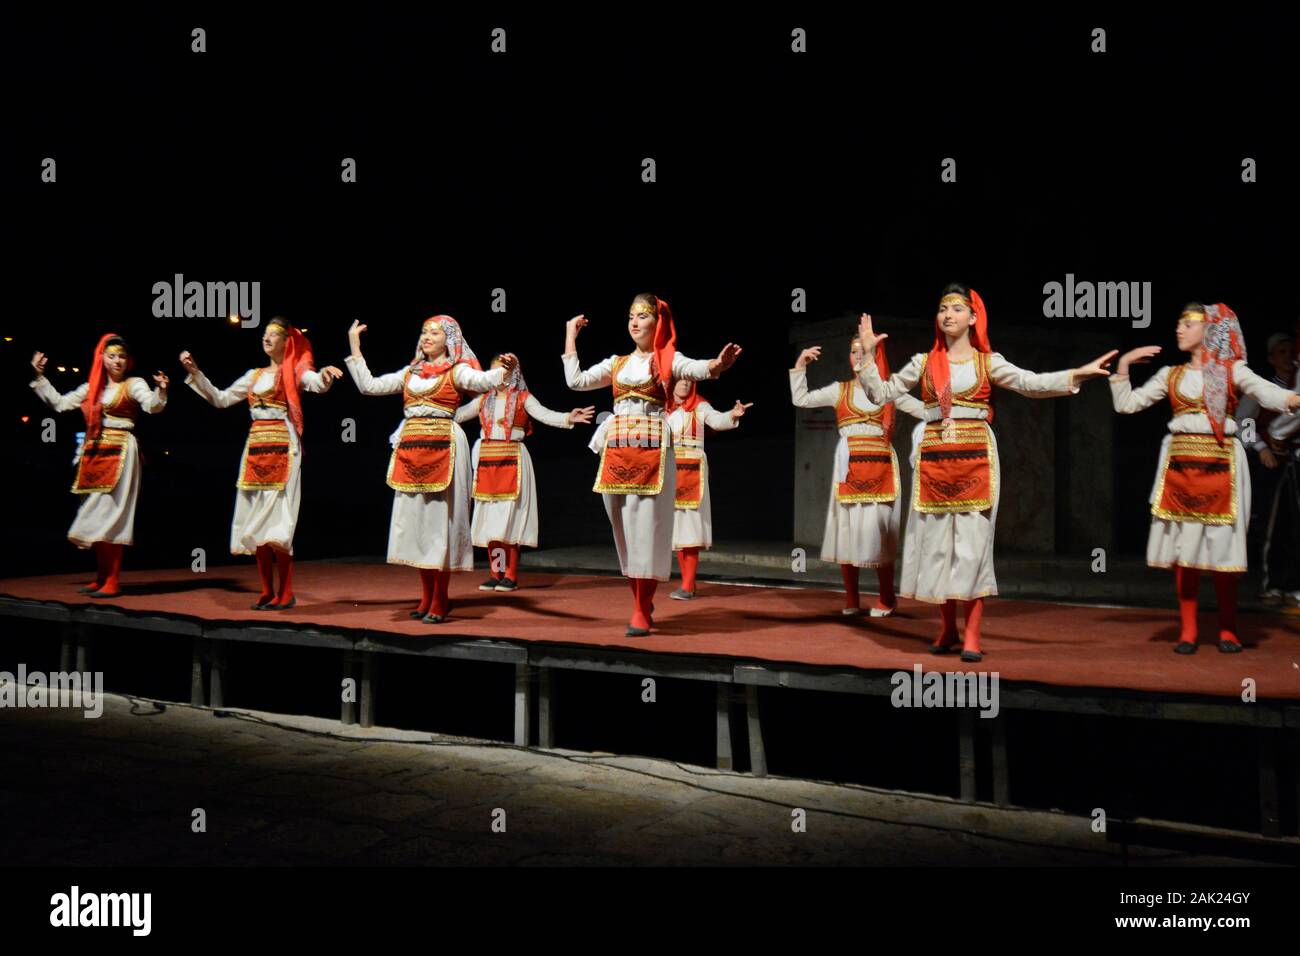 Albanian folk dancers with traditional costumes, celebrating Ramadan in Skopje, Macedonia Stock Photo